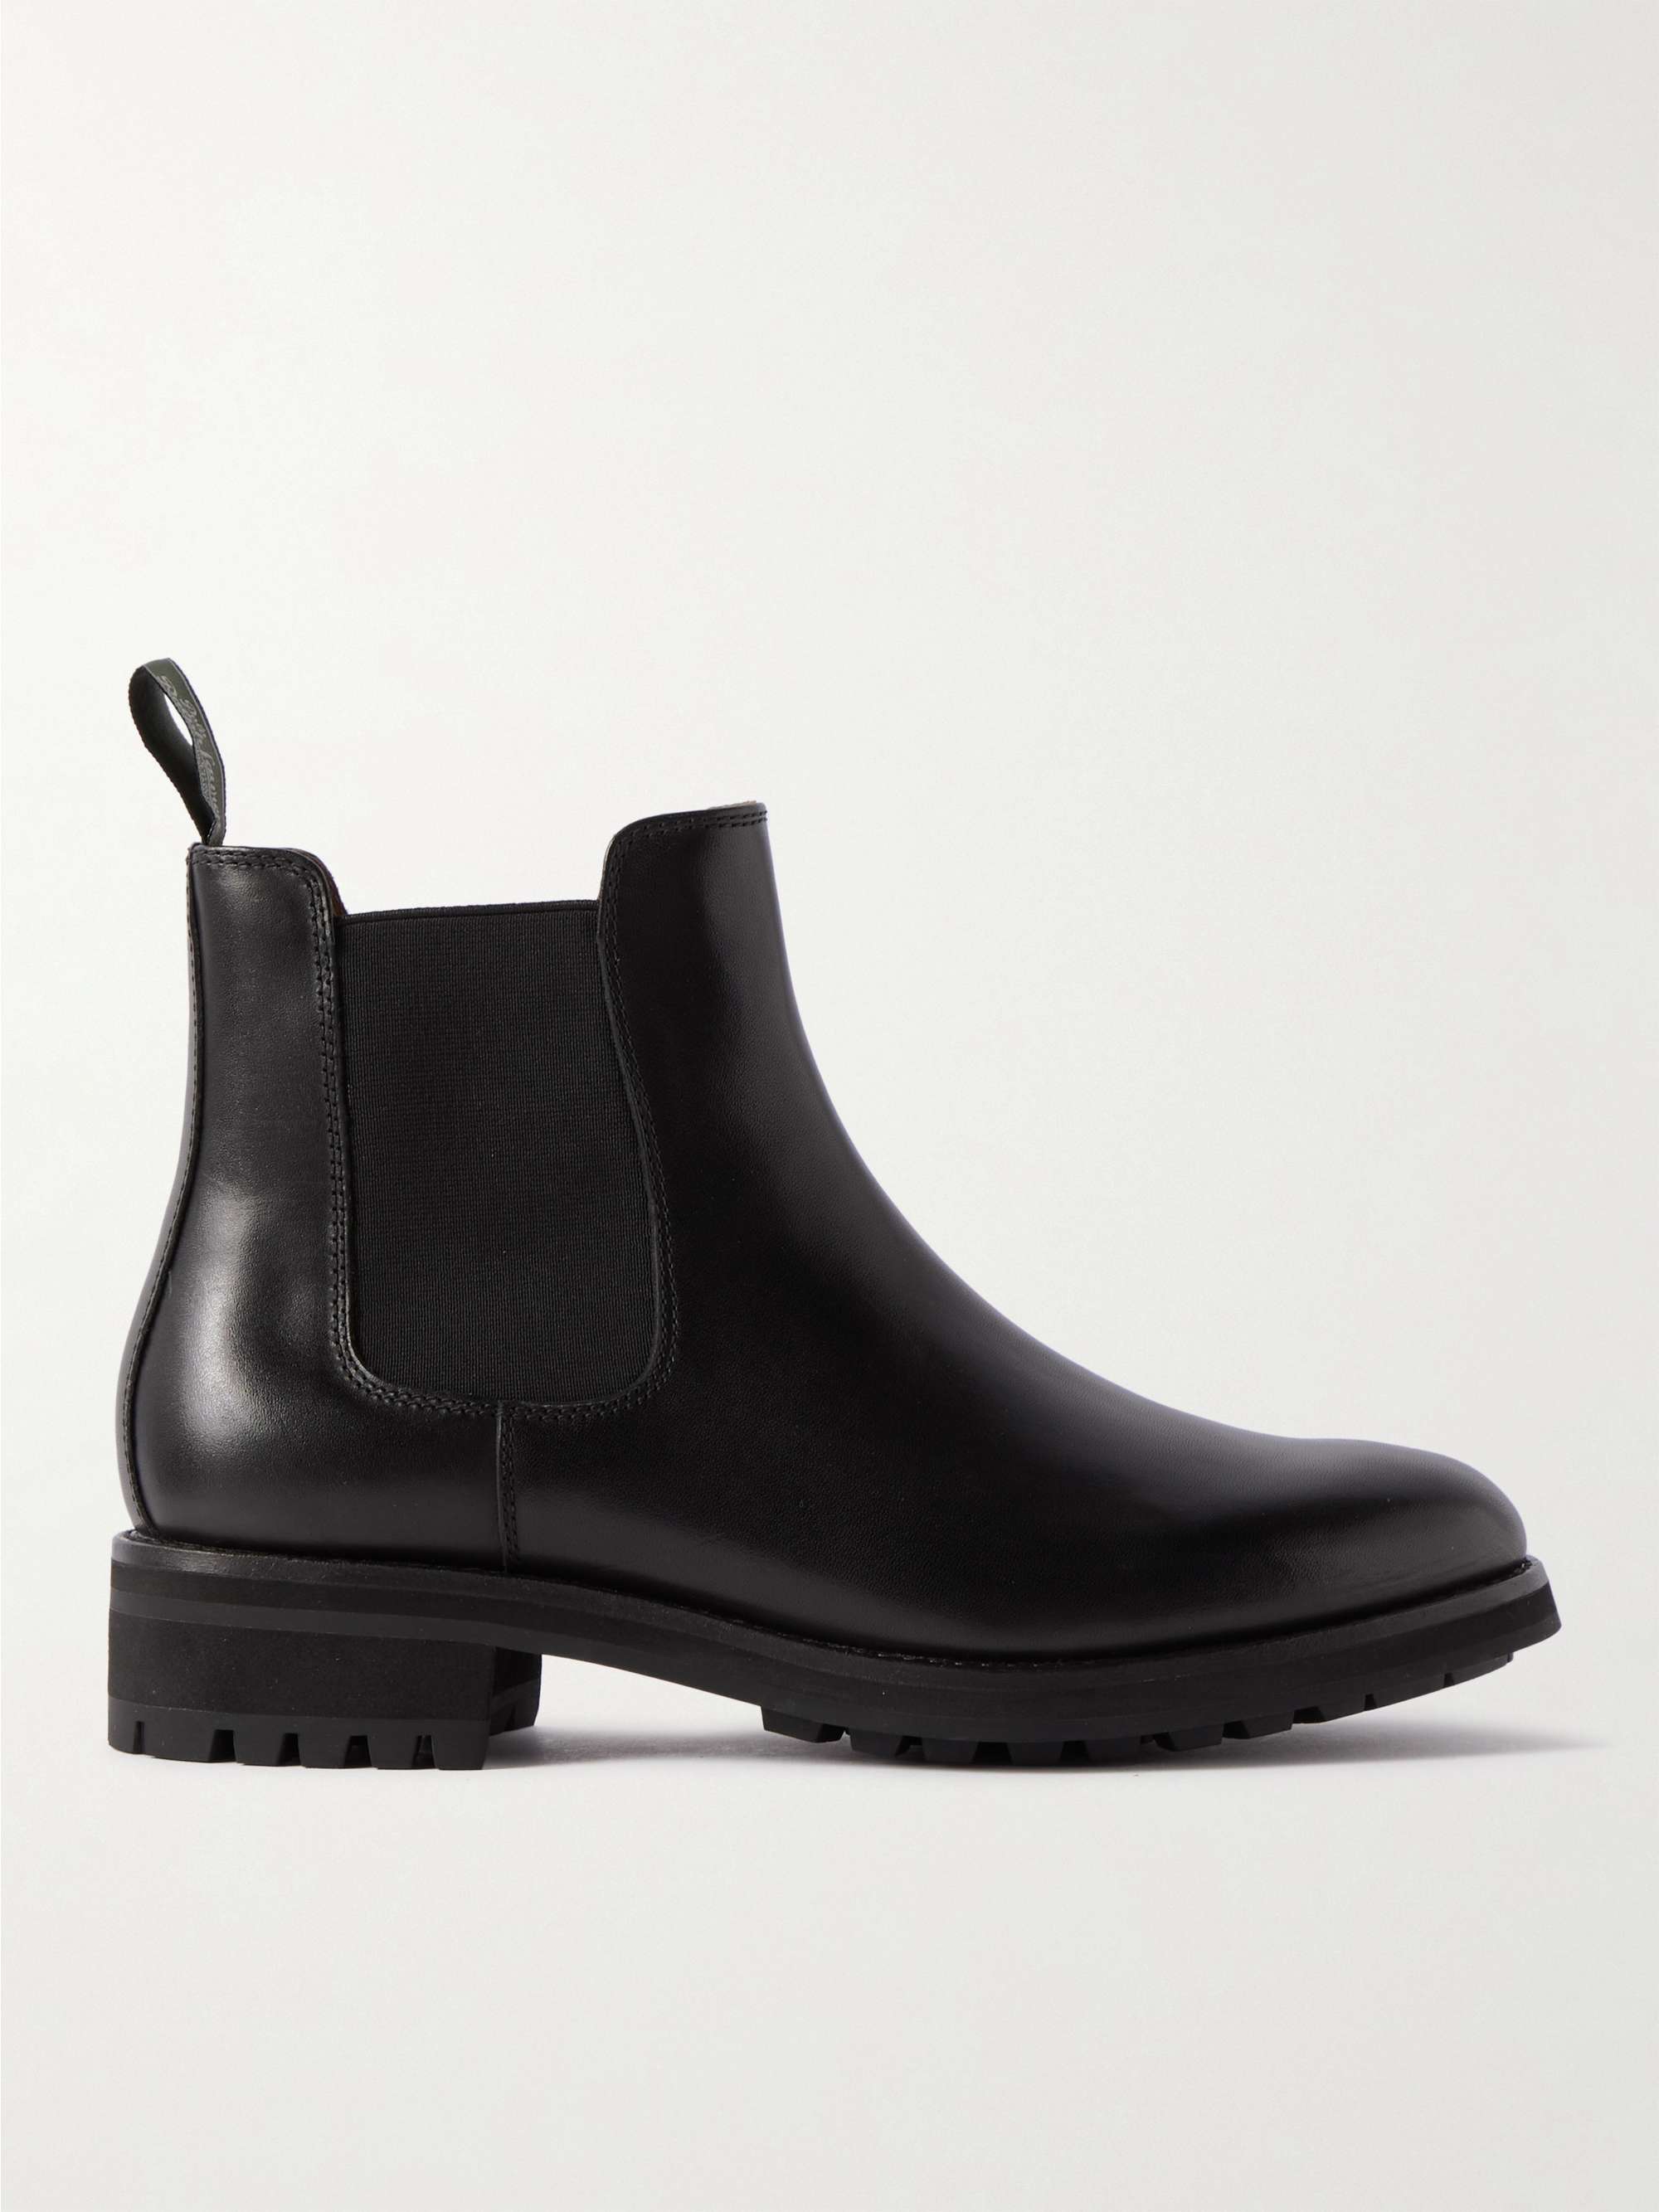 POLO RALPH LAUREN Bryson Leather Chelsea Boots for Men | MR PORTER